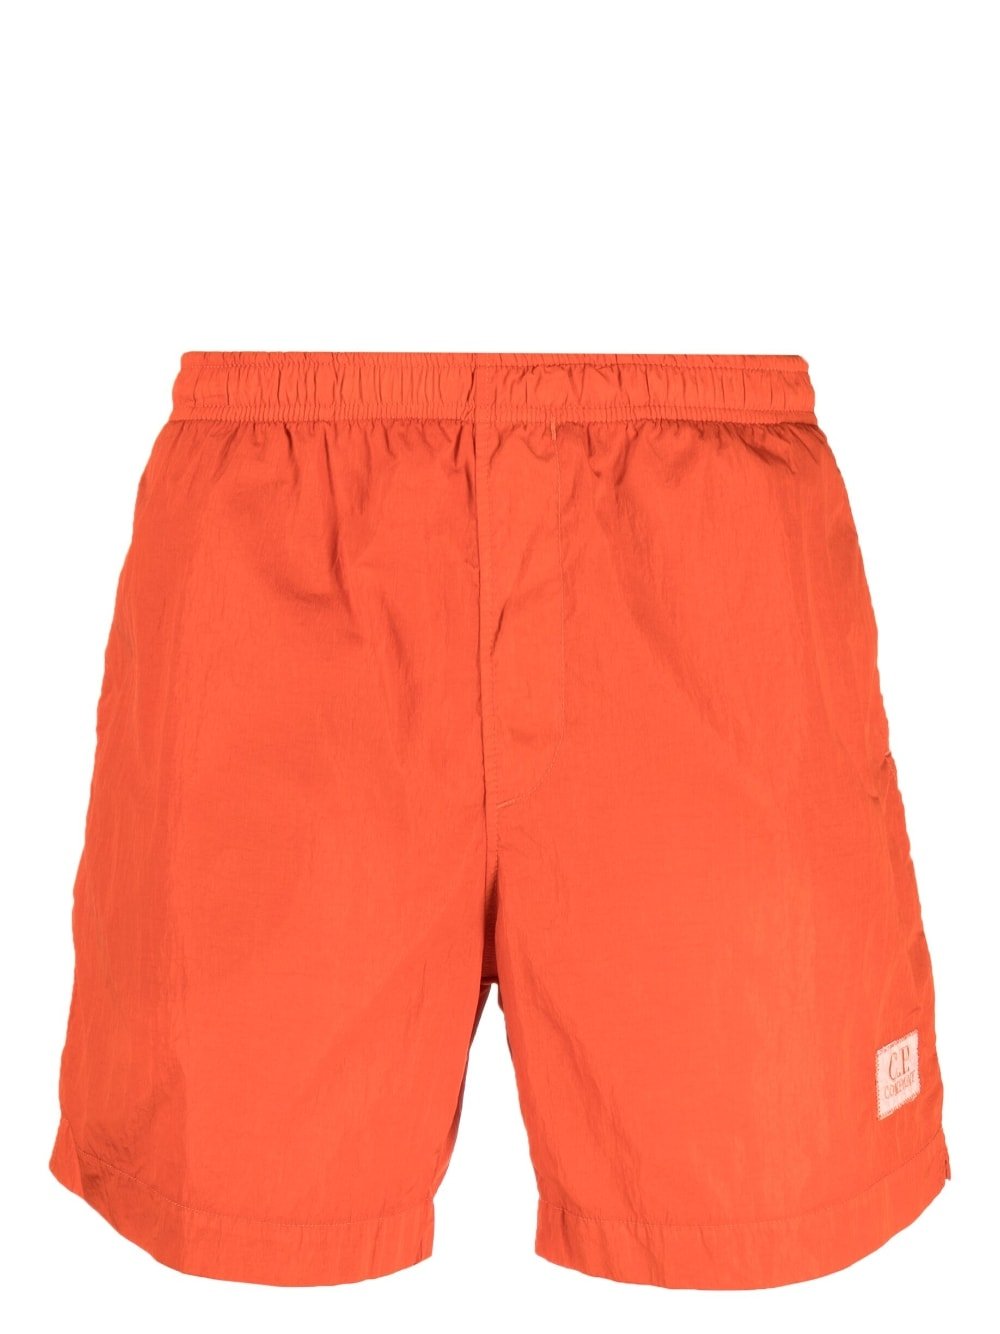 C.P. Company MBW005A Eco-Chrome R Logo Swim Shorts - 439 Orange - Escape Menswear